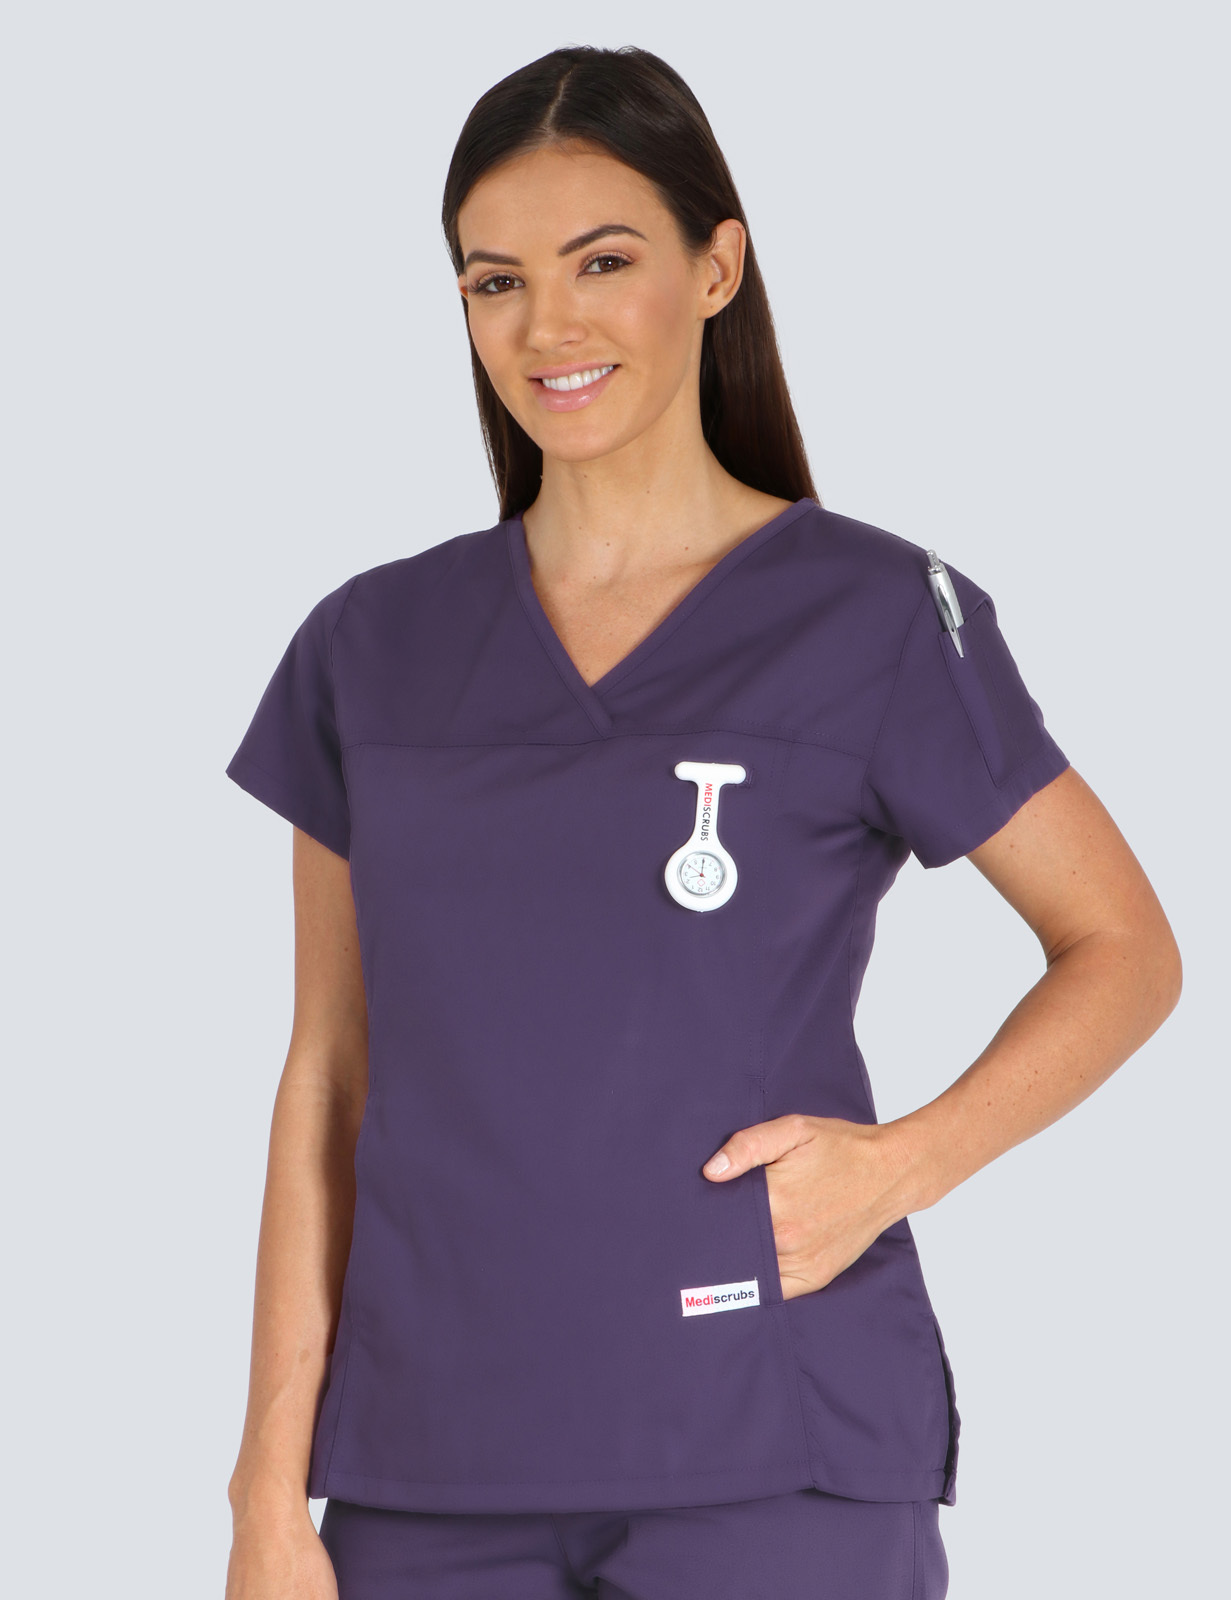 Peninsula Health - Dialysis RN (Women's Fit Solid Scrub Top in Aubergine incl Logos)